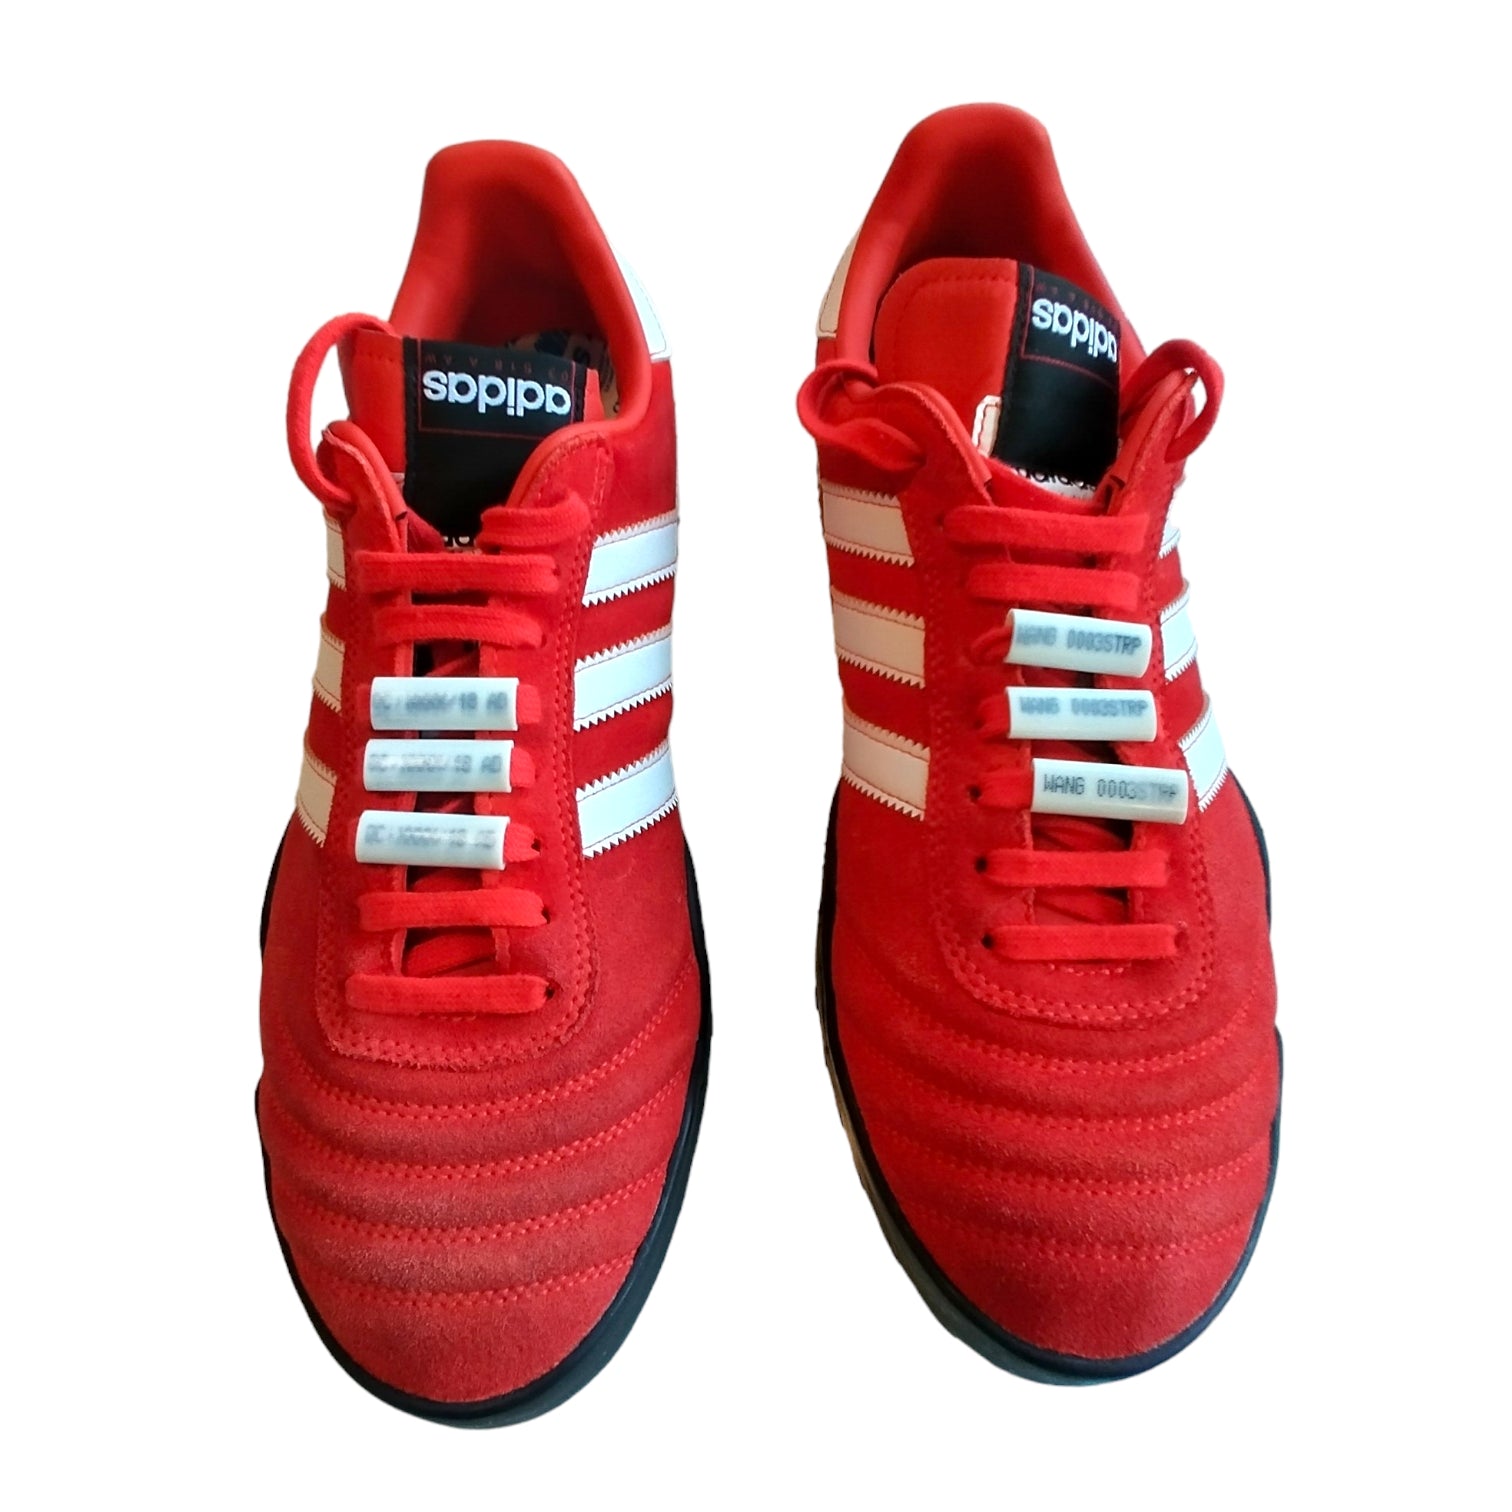 Adidas Originals by Alexander Wang Orange B-Ball Soccer